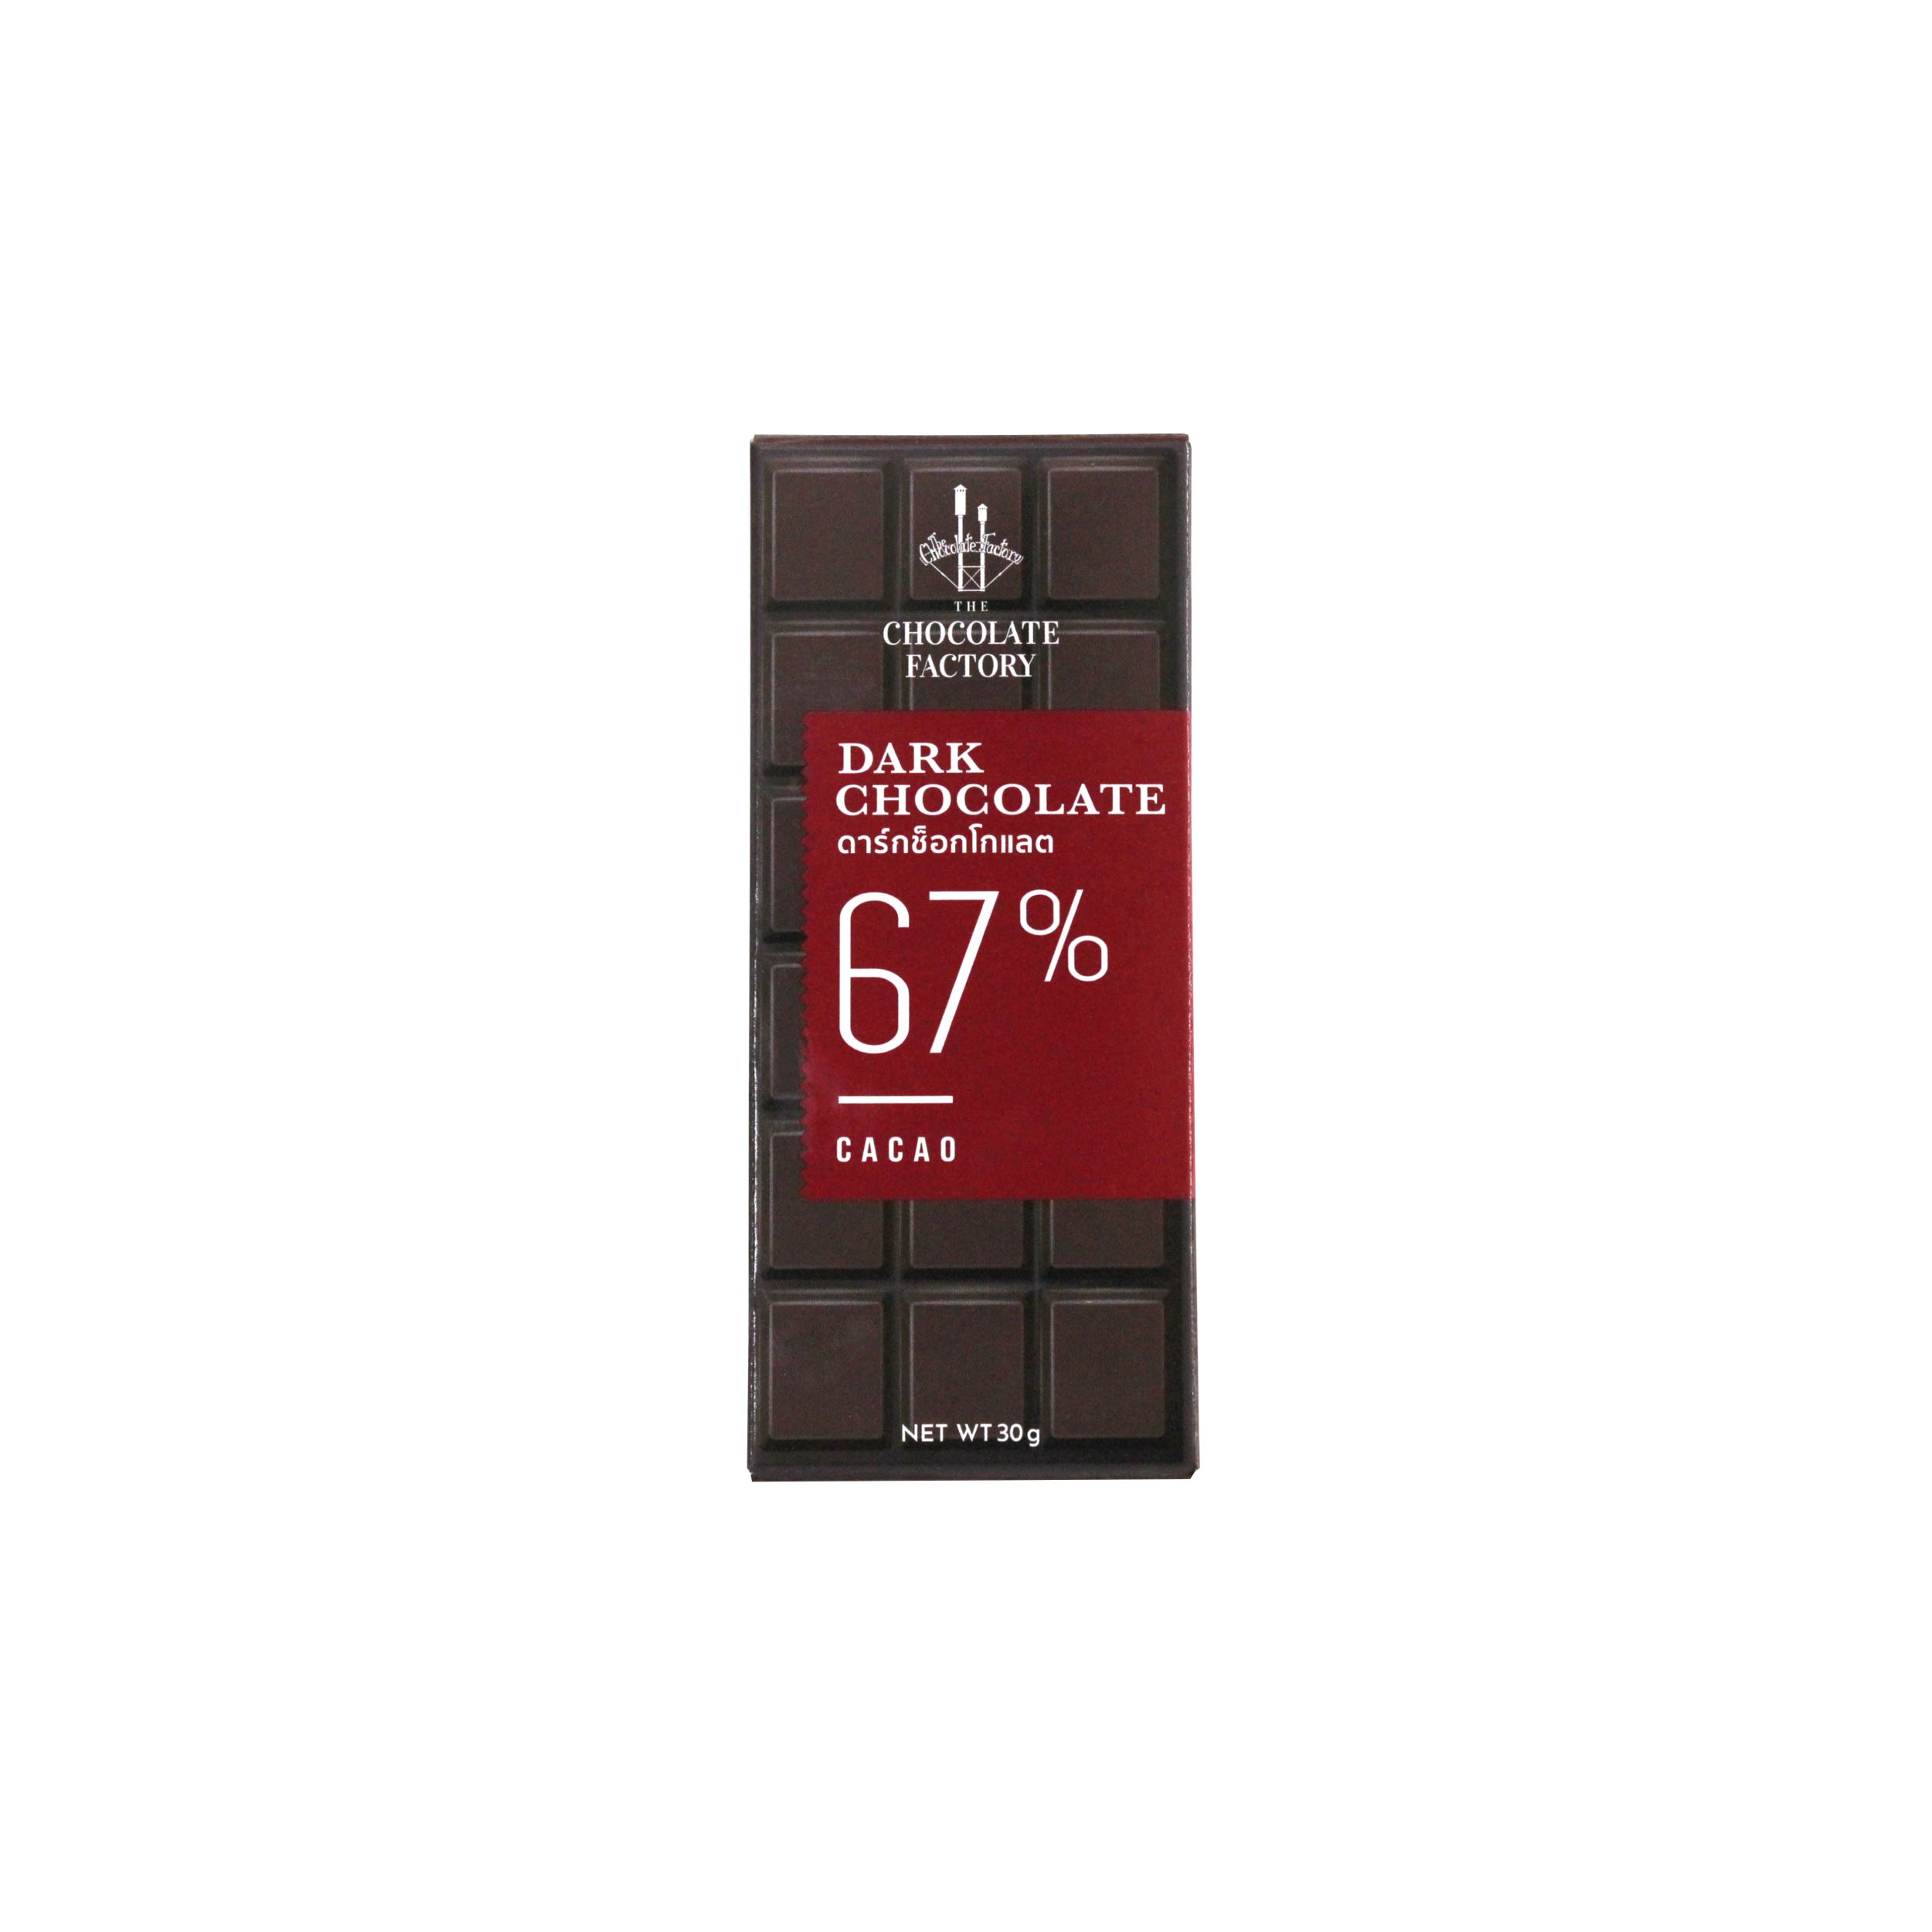 The Chocolate Factory-Chocolate bar 67%